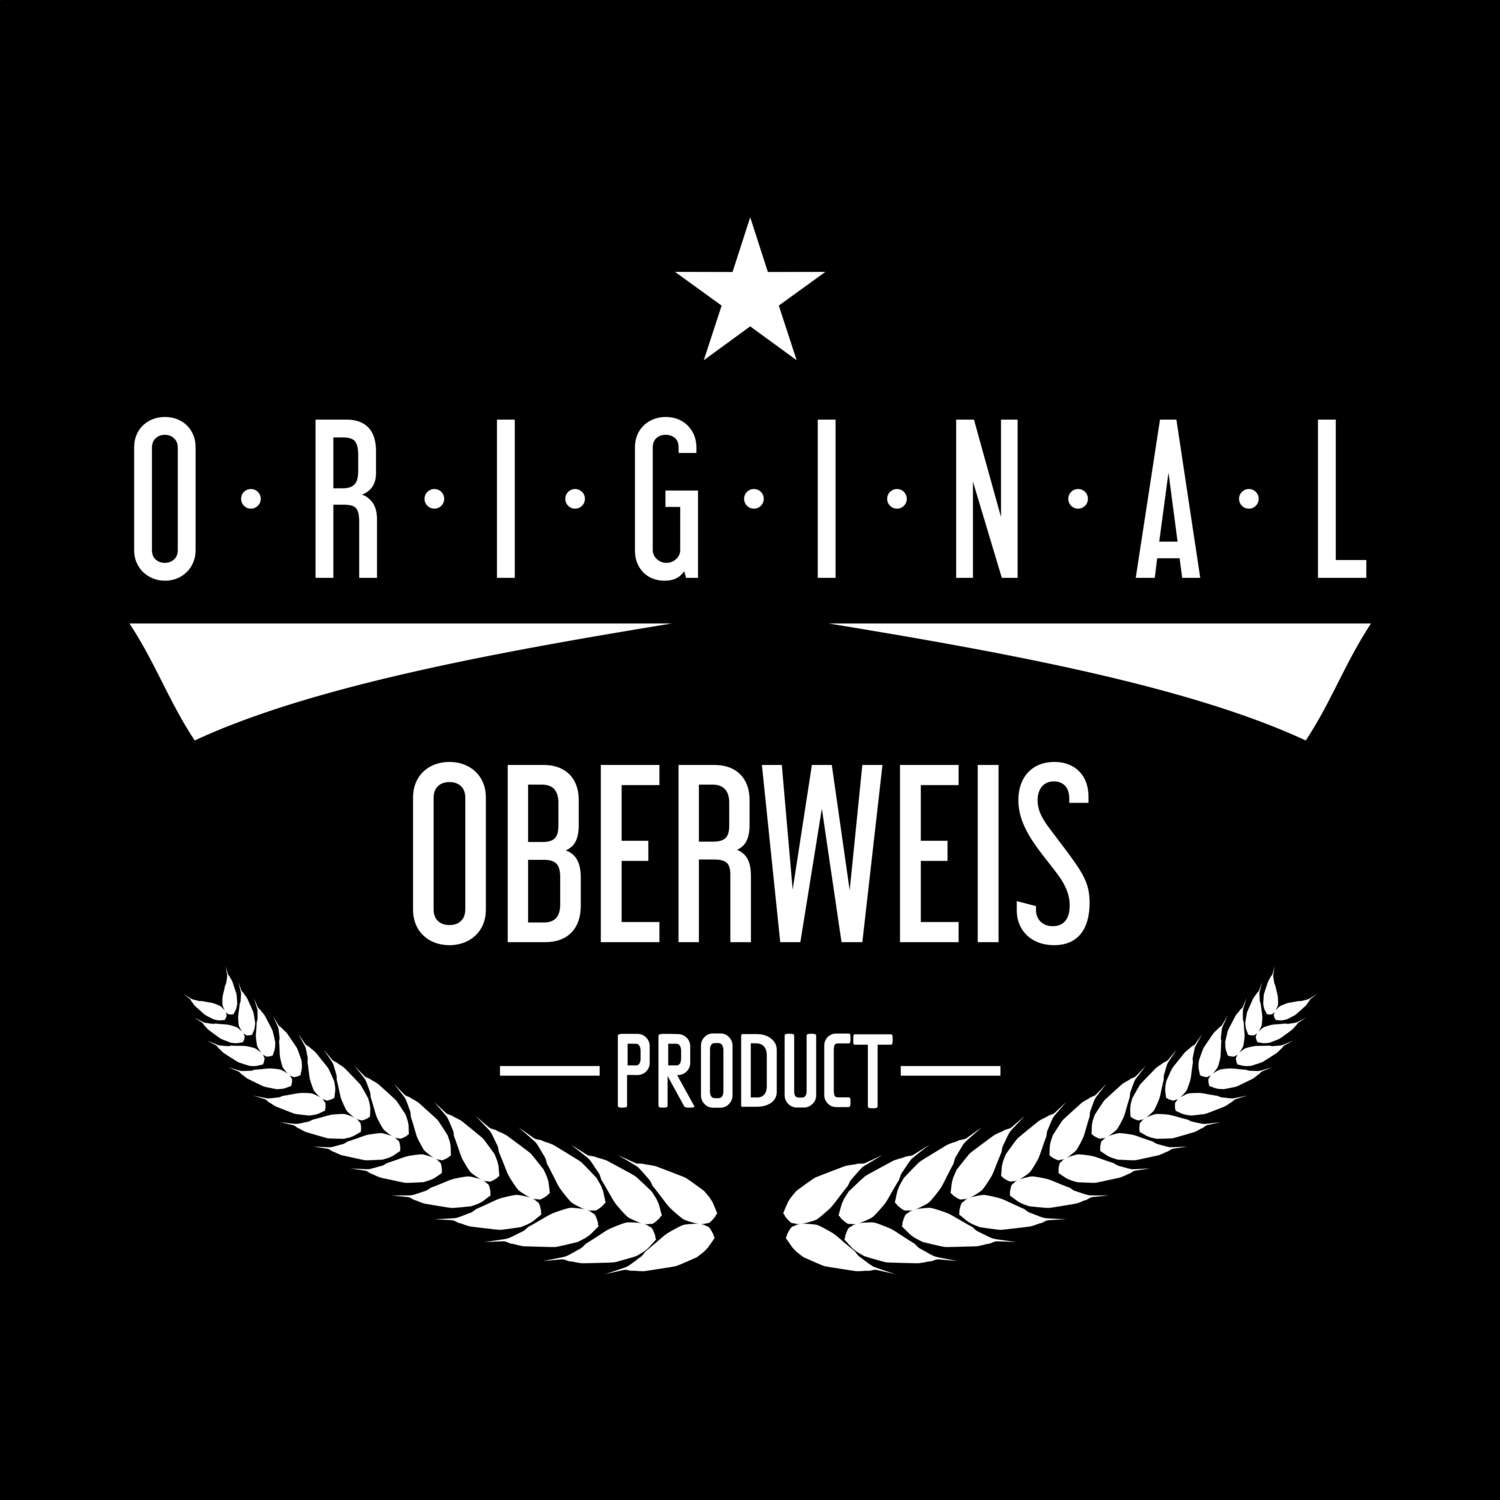 Oberweis T-Shirt »Original Product«